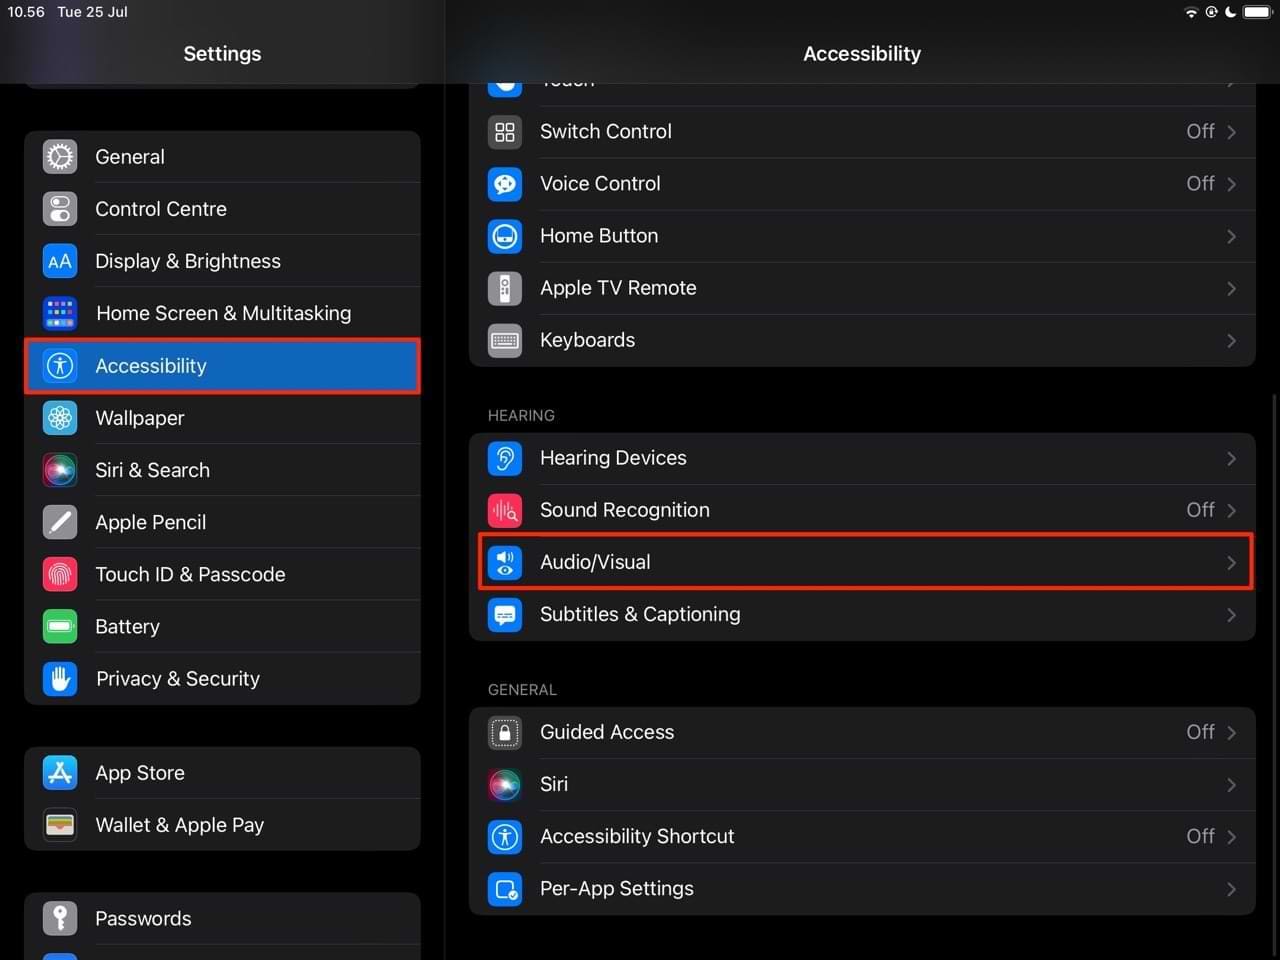 Settings to access Audio/Visual on iPadOS